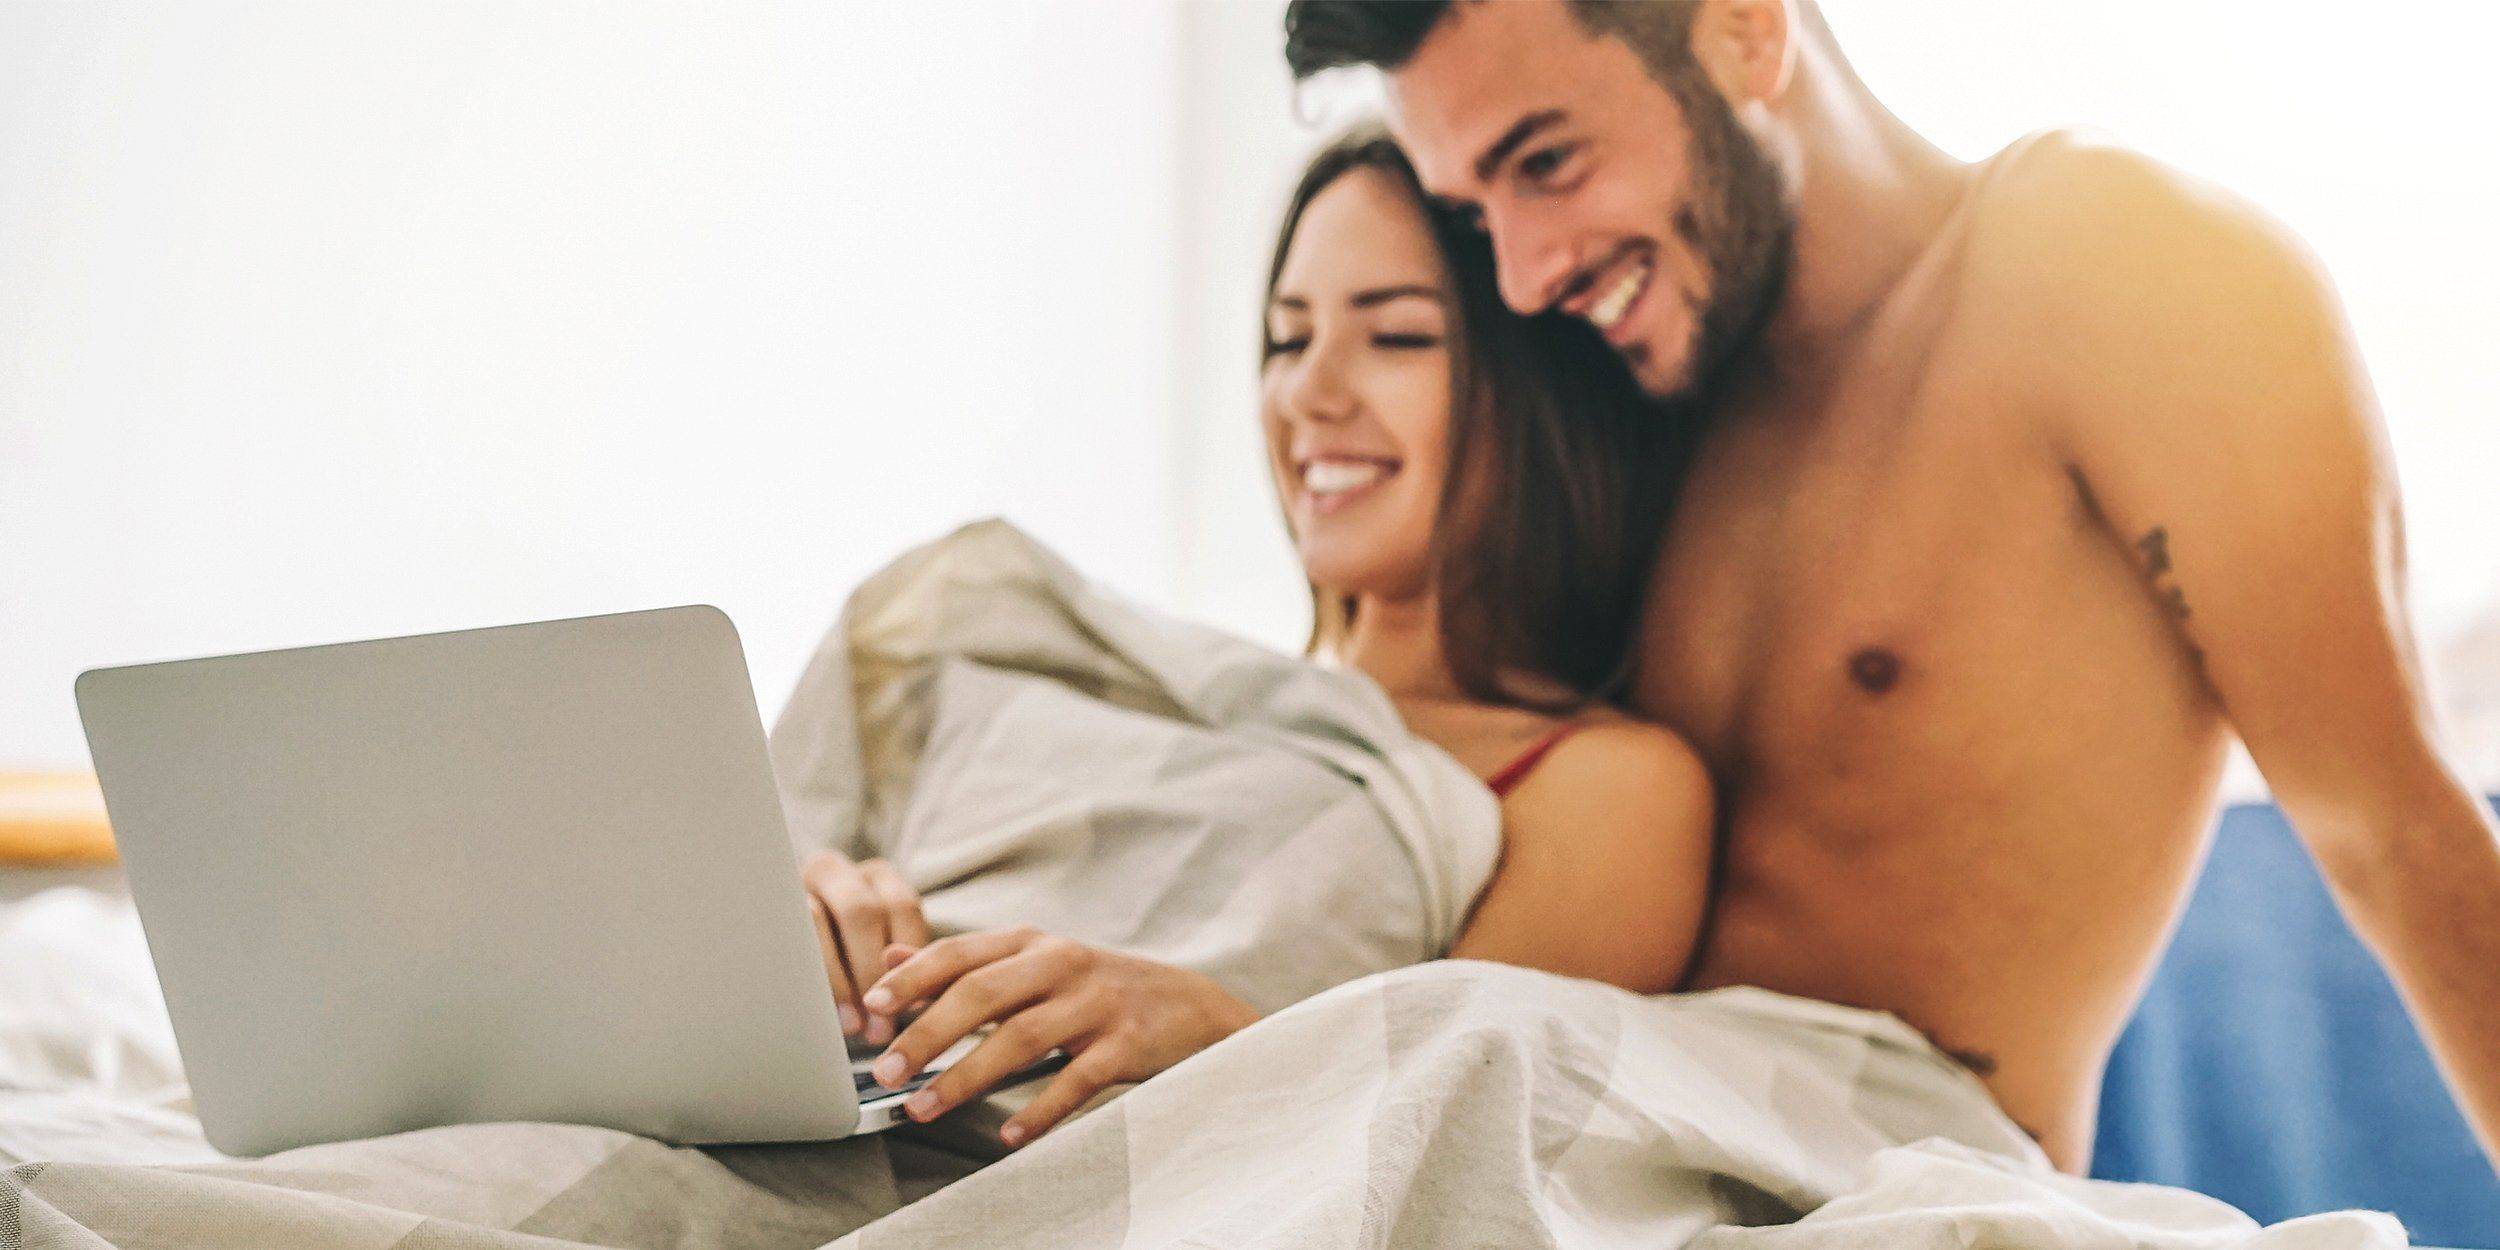 Successful bdsm internet dating ads